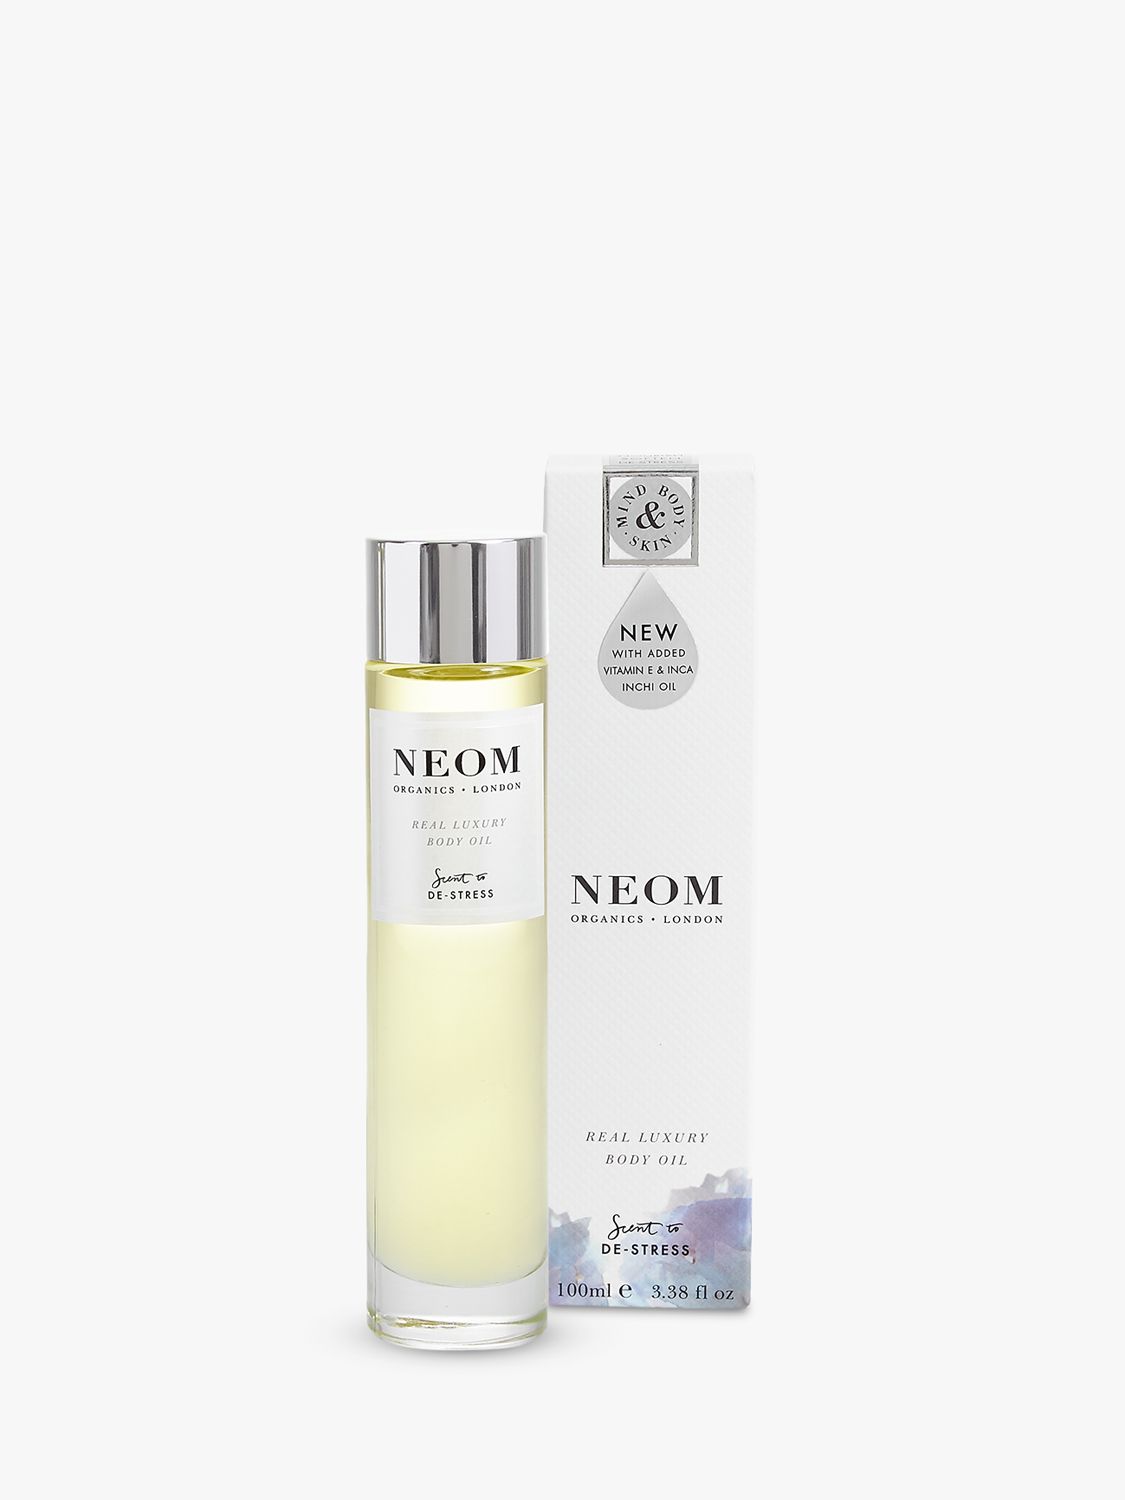 Neom Organics London Real Luxury Vitamin Body Oil, 100ml 1